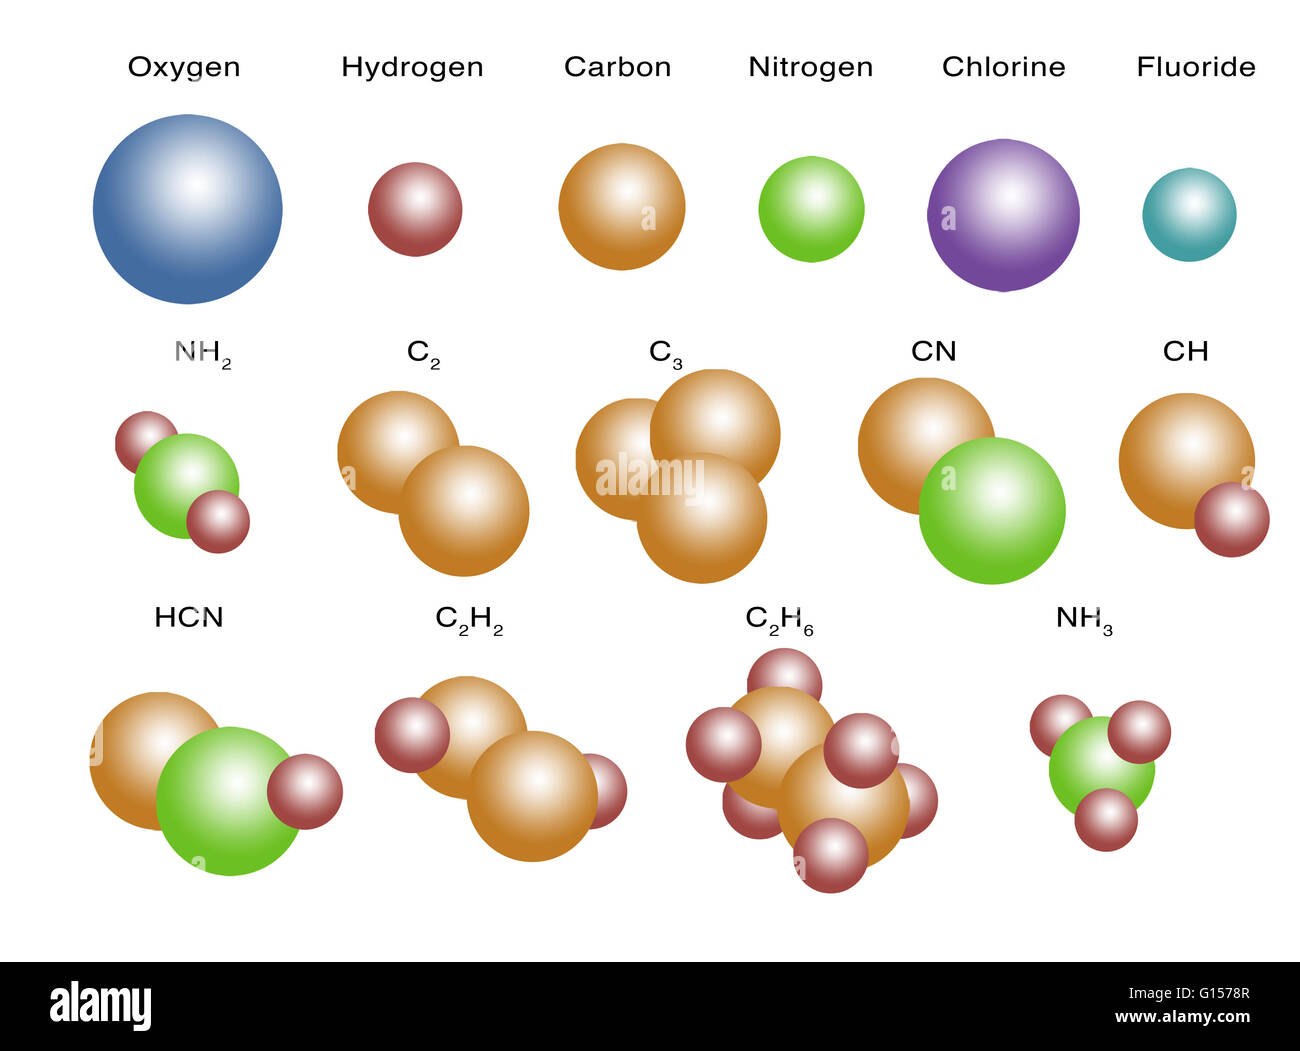 Молекула воздуха меньше молекулы воды. Молекула воздуха. Размер вируса и молекулы. Сравнение размеров молекул. Карбон Оксиген нитроген.